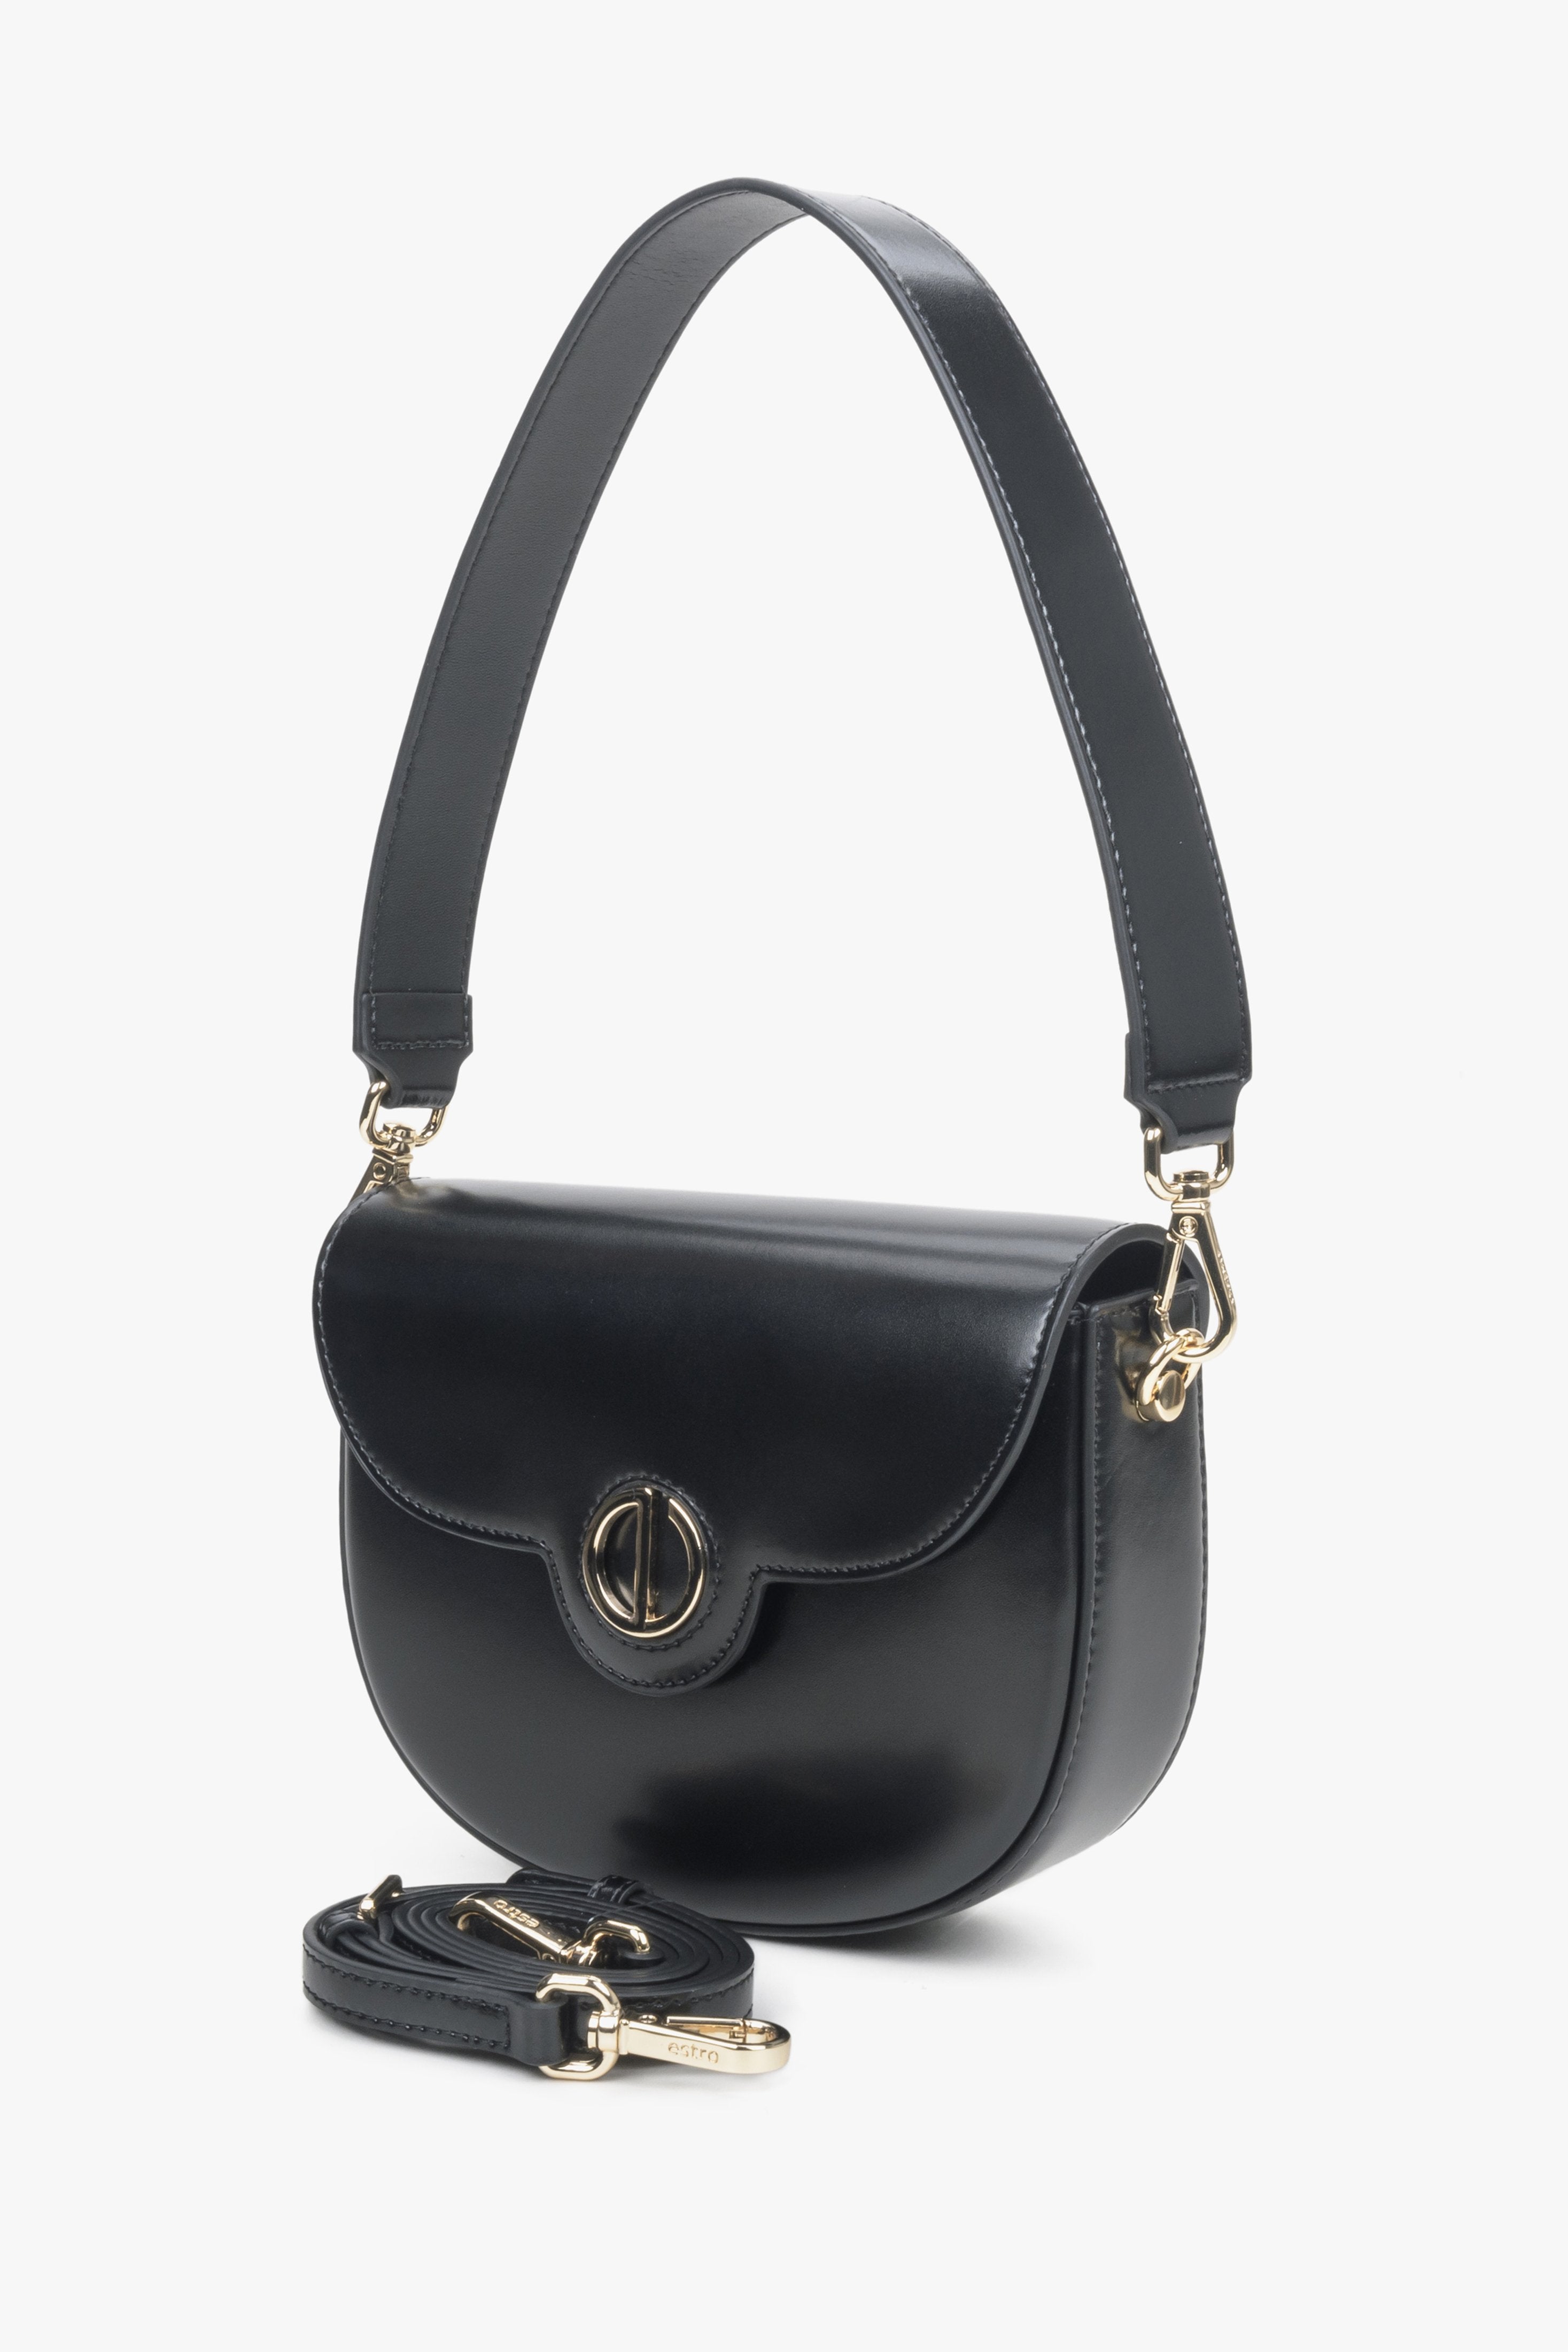 Estro women's black shoulder bag with golden accents.